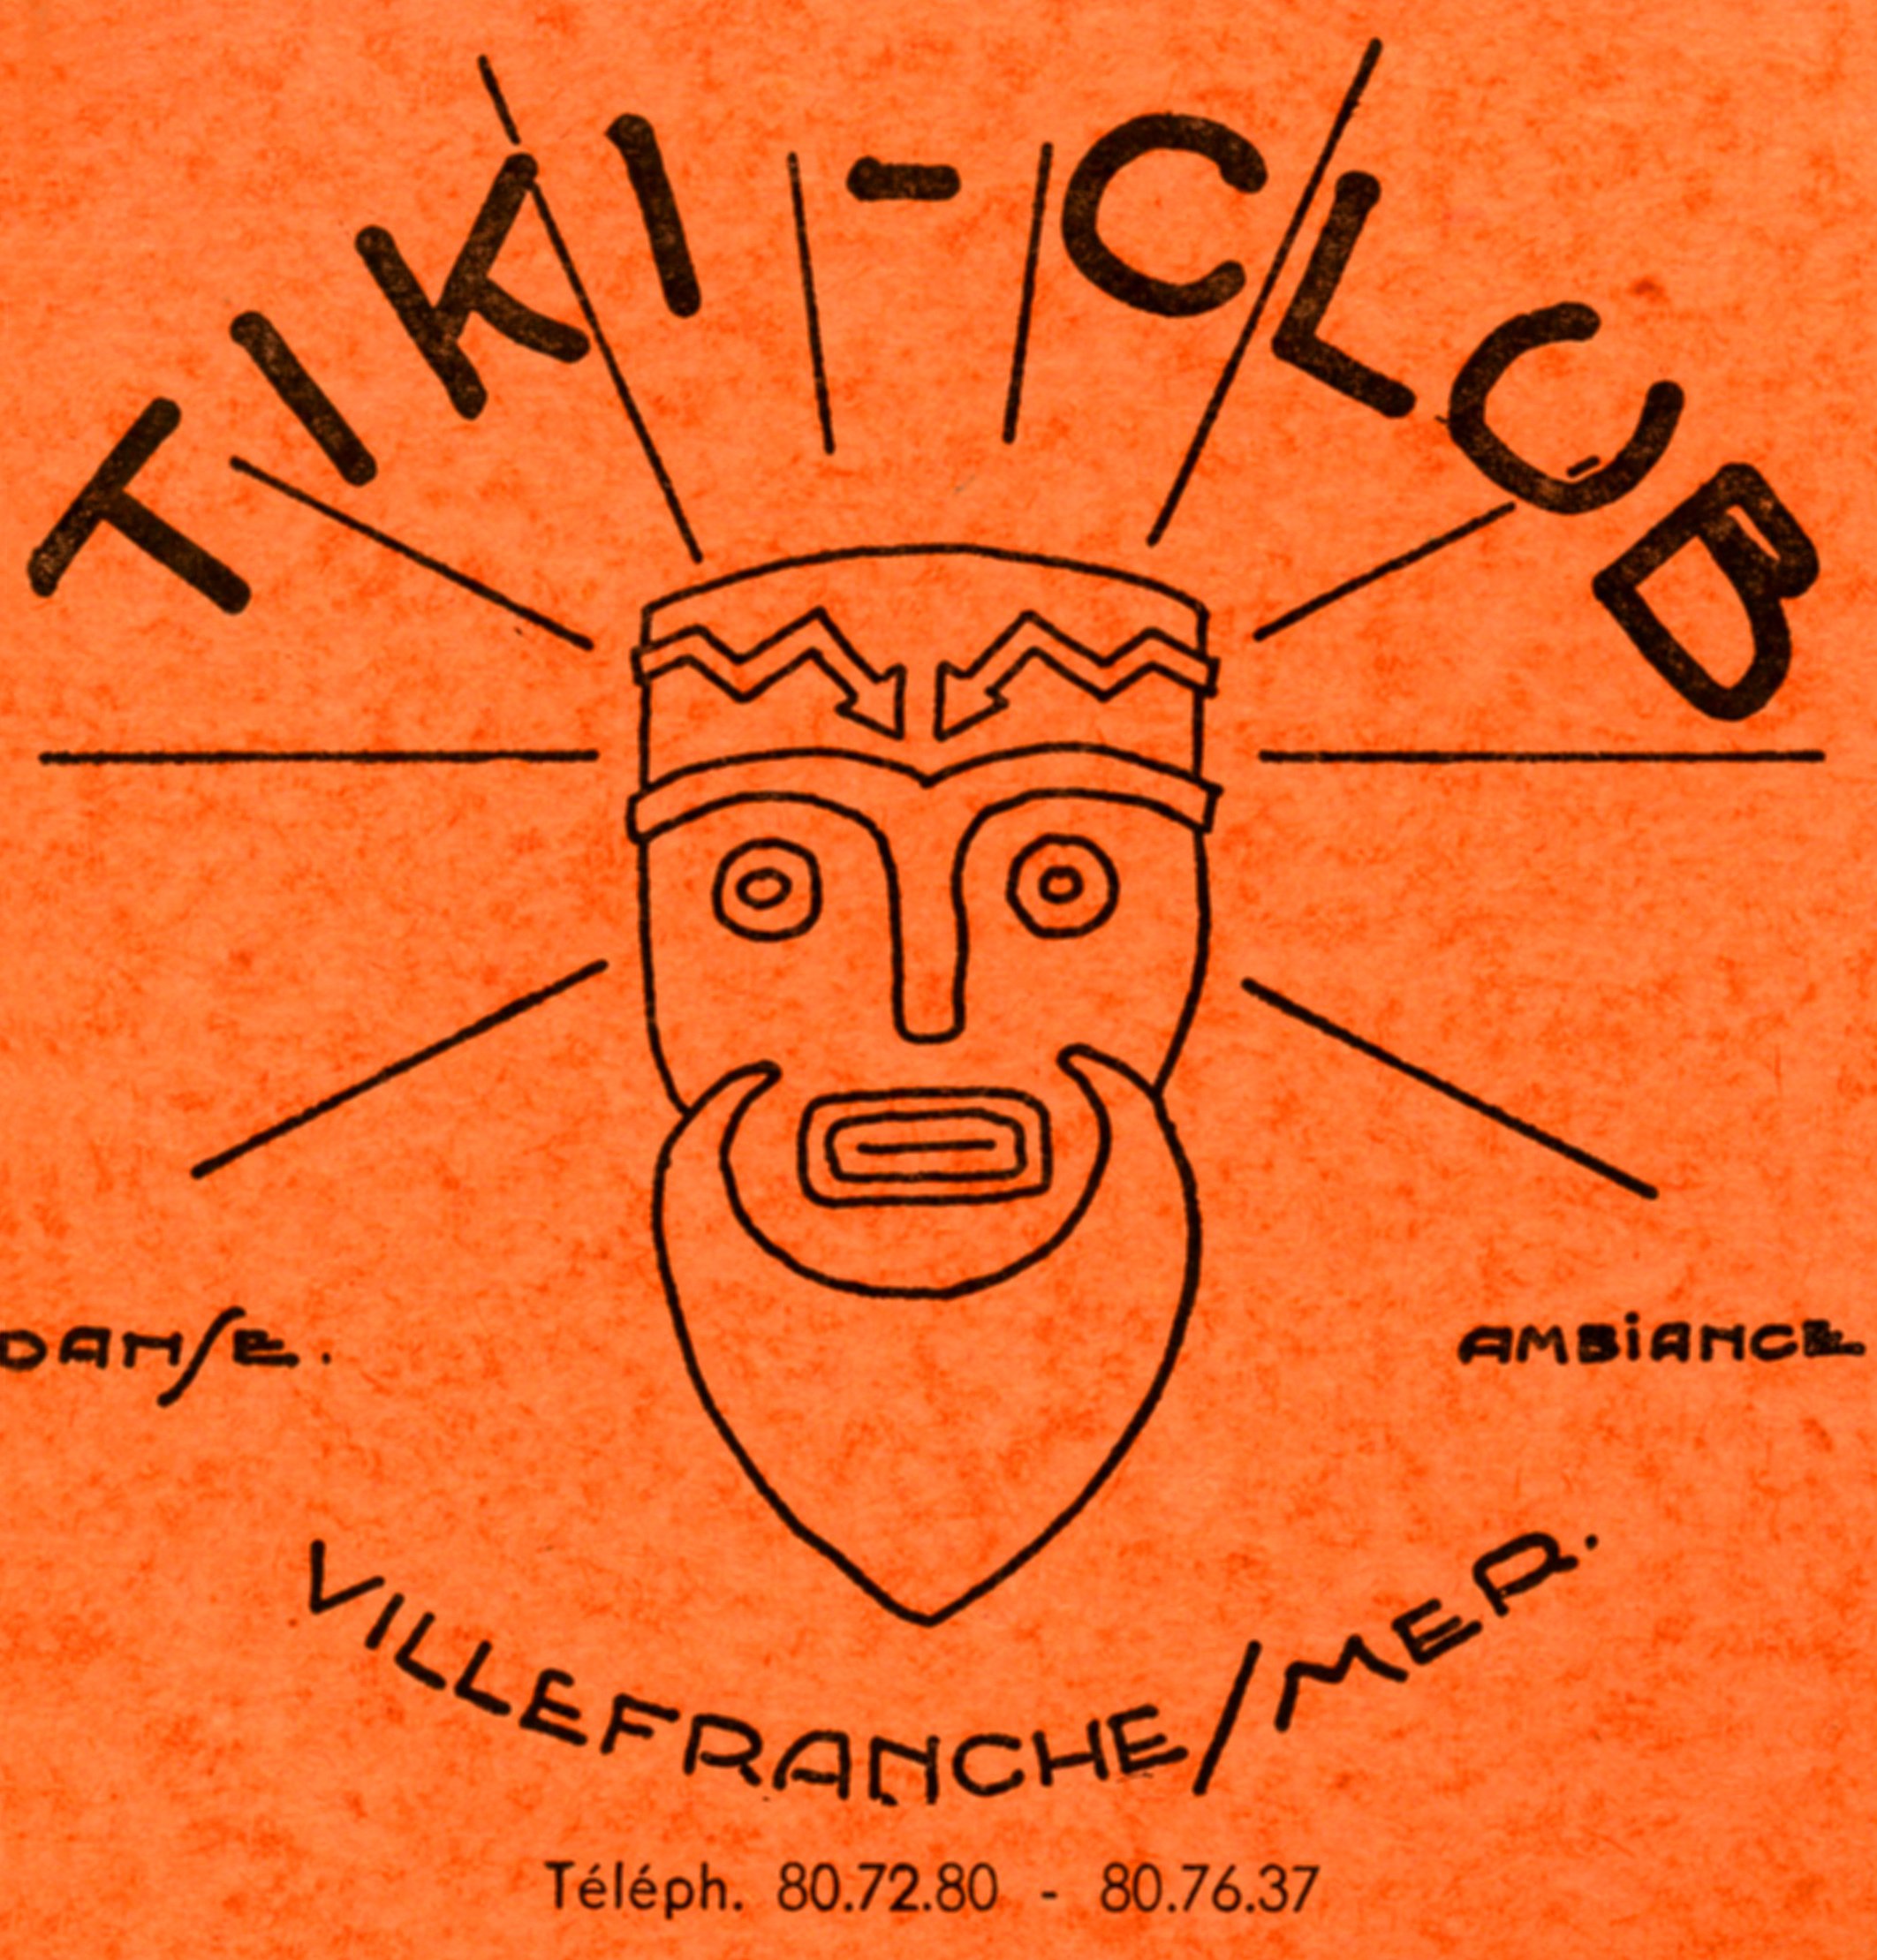 Tiki-Club at Villefranche